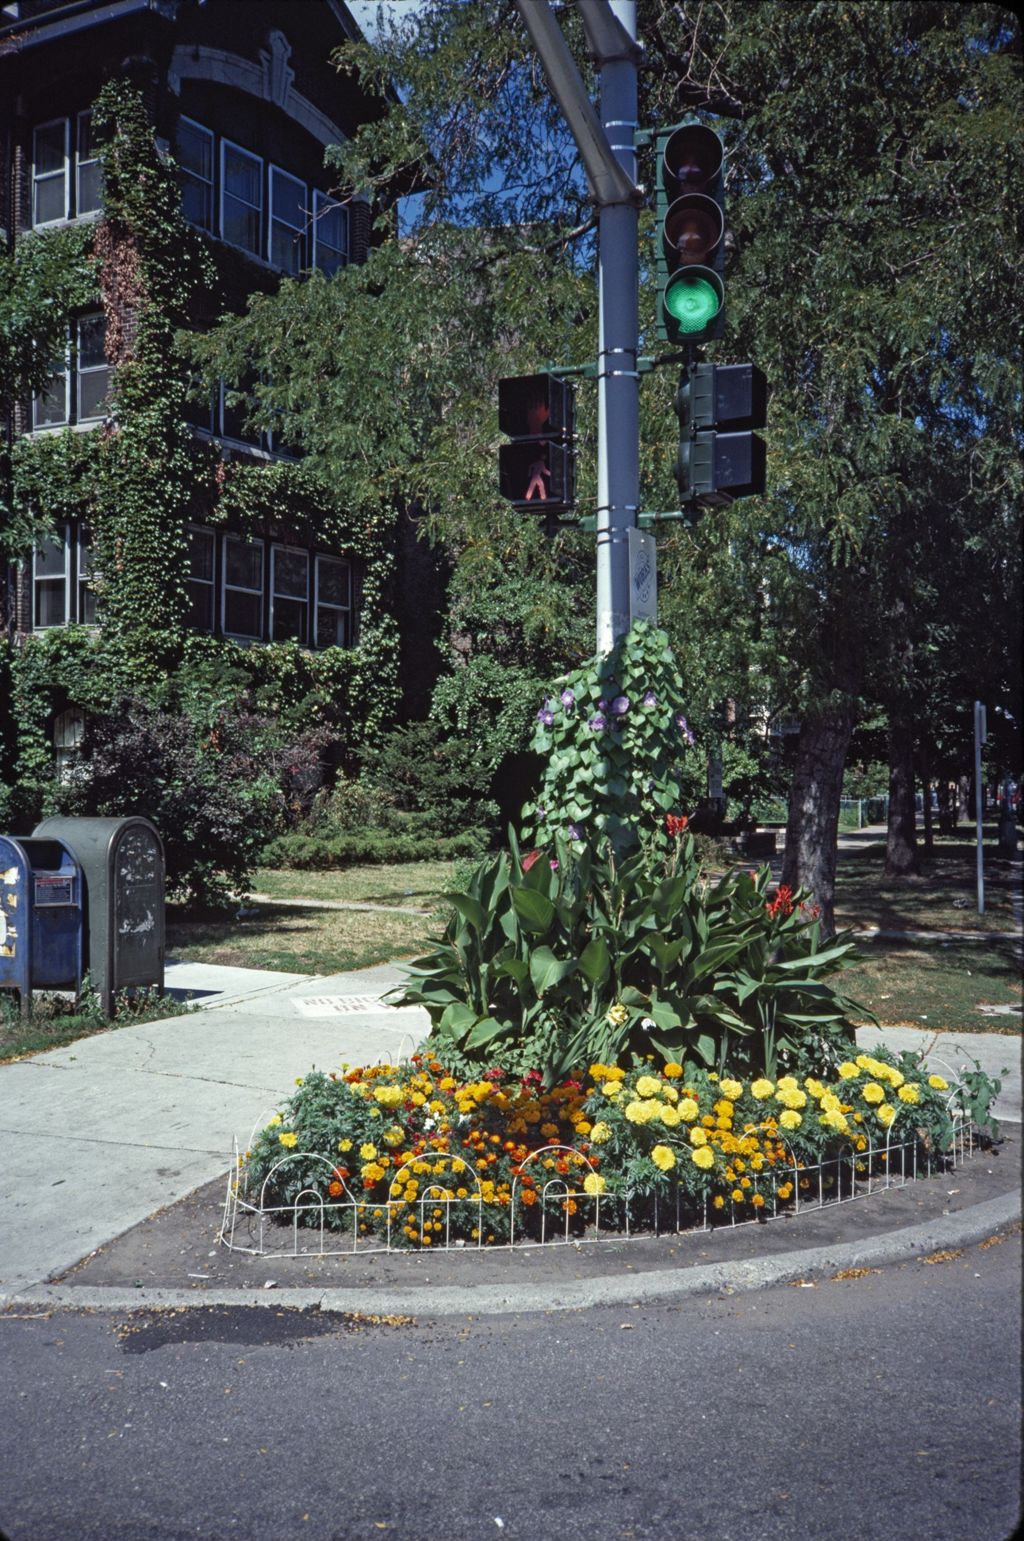 Miniature of Curbside plantings at street corner